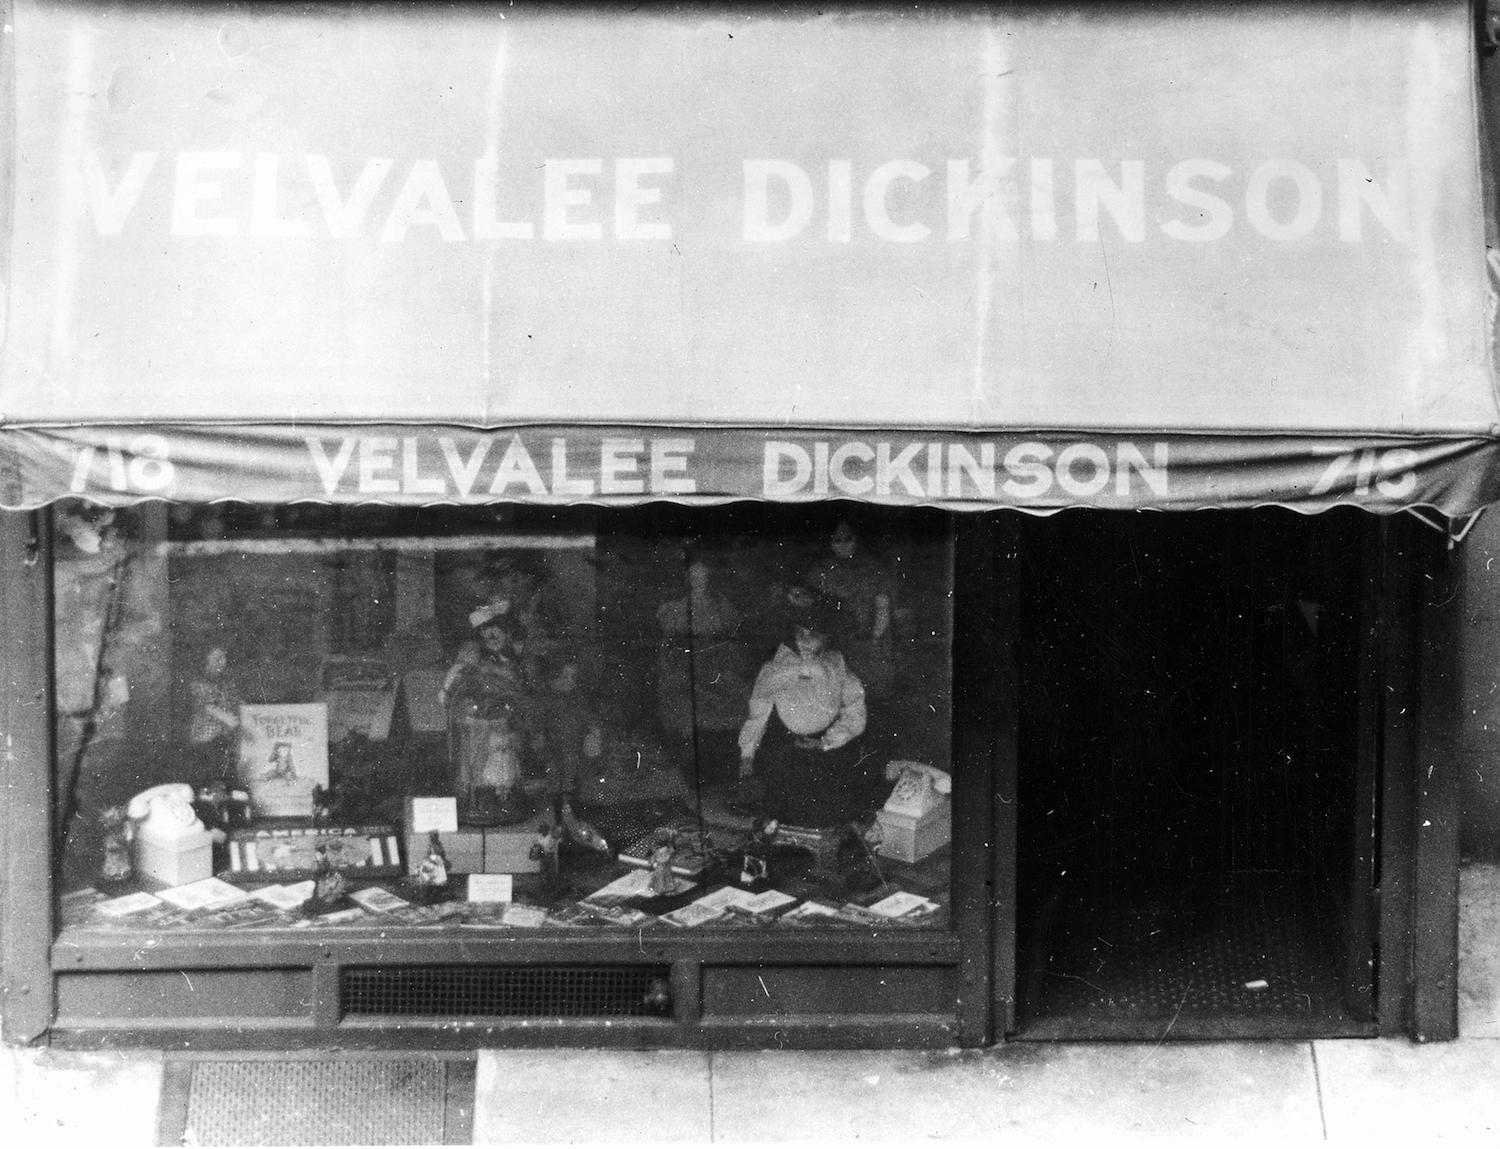 Velvalee Dickinson Doll Shop